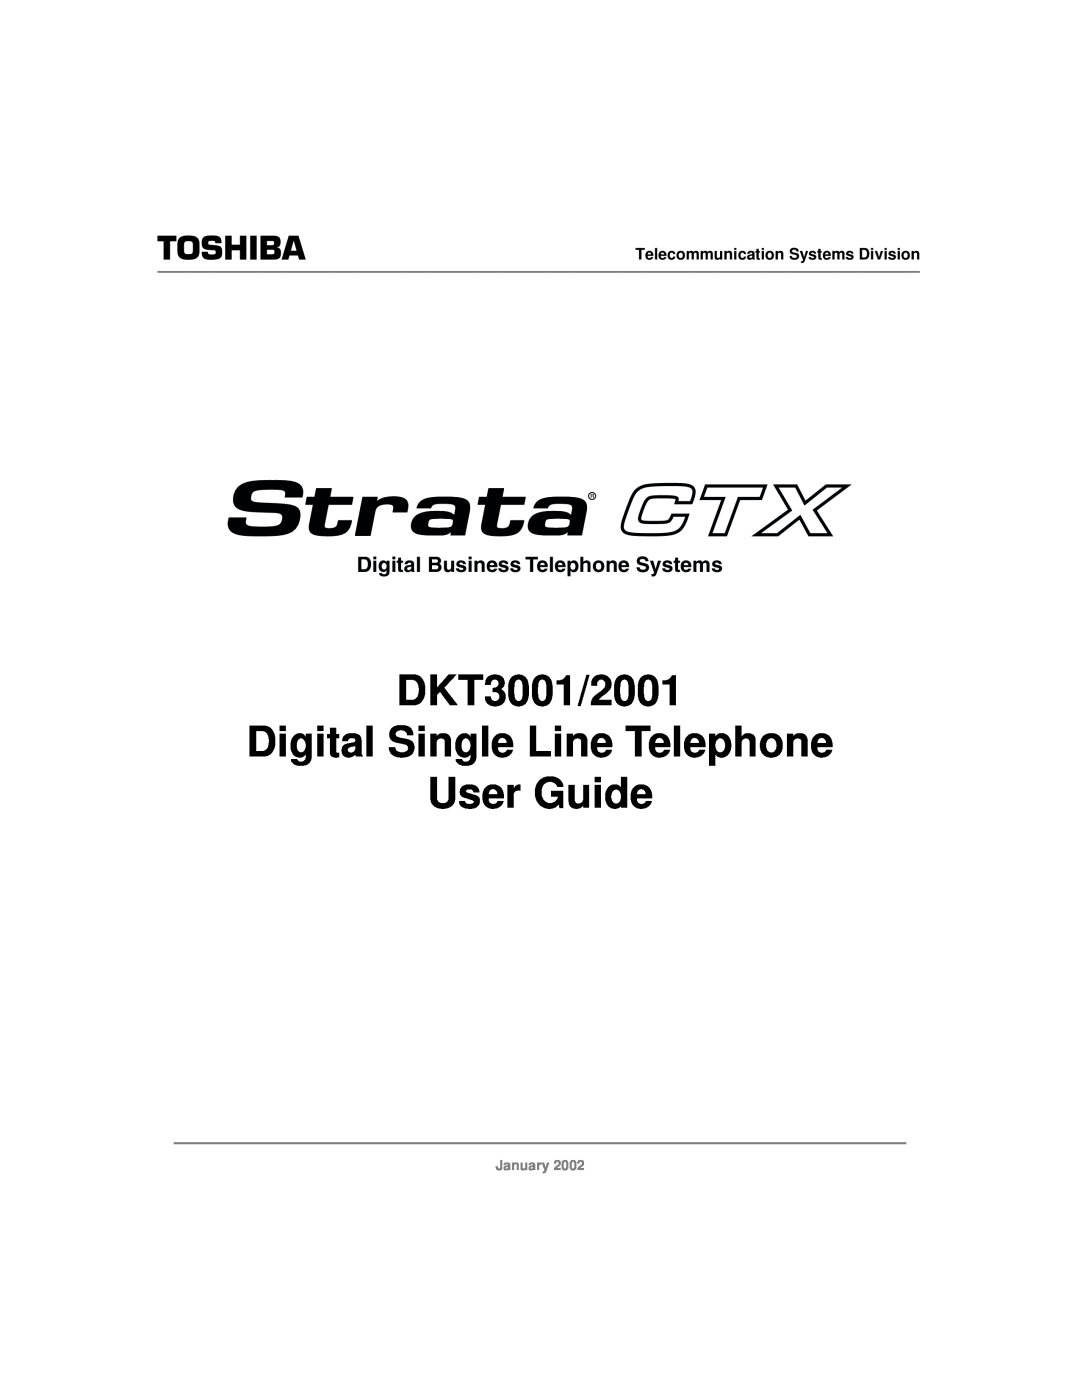 Toshiba manual DKT3001/2001 Digital Single Line Telephone User Guide, Digital Business Telephone Systems, January 